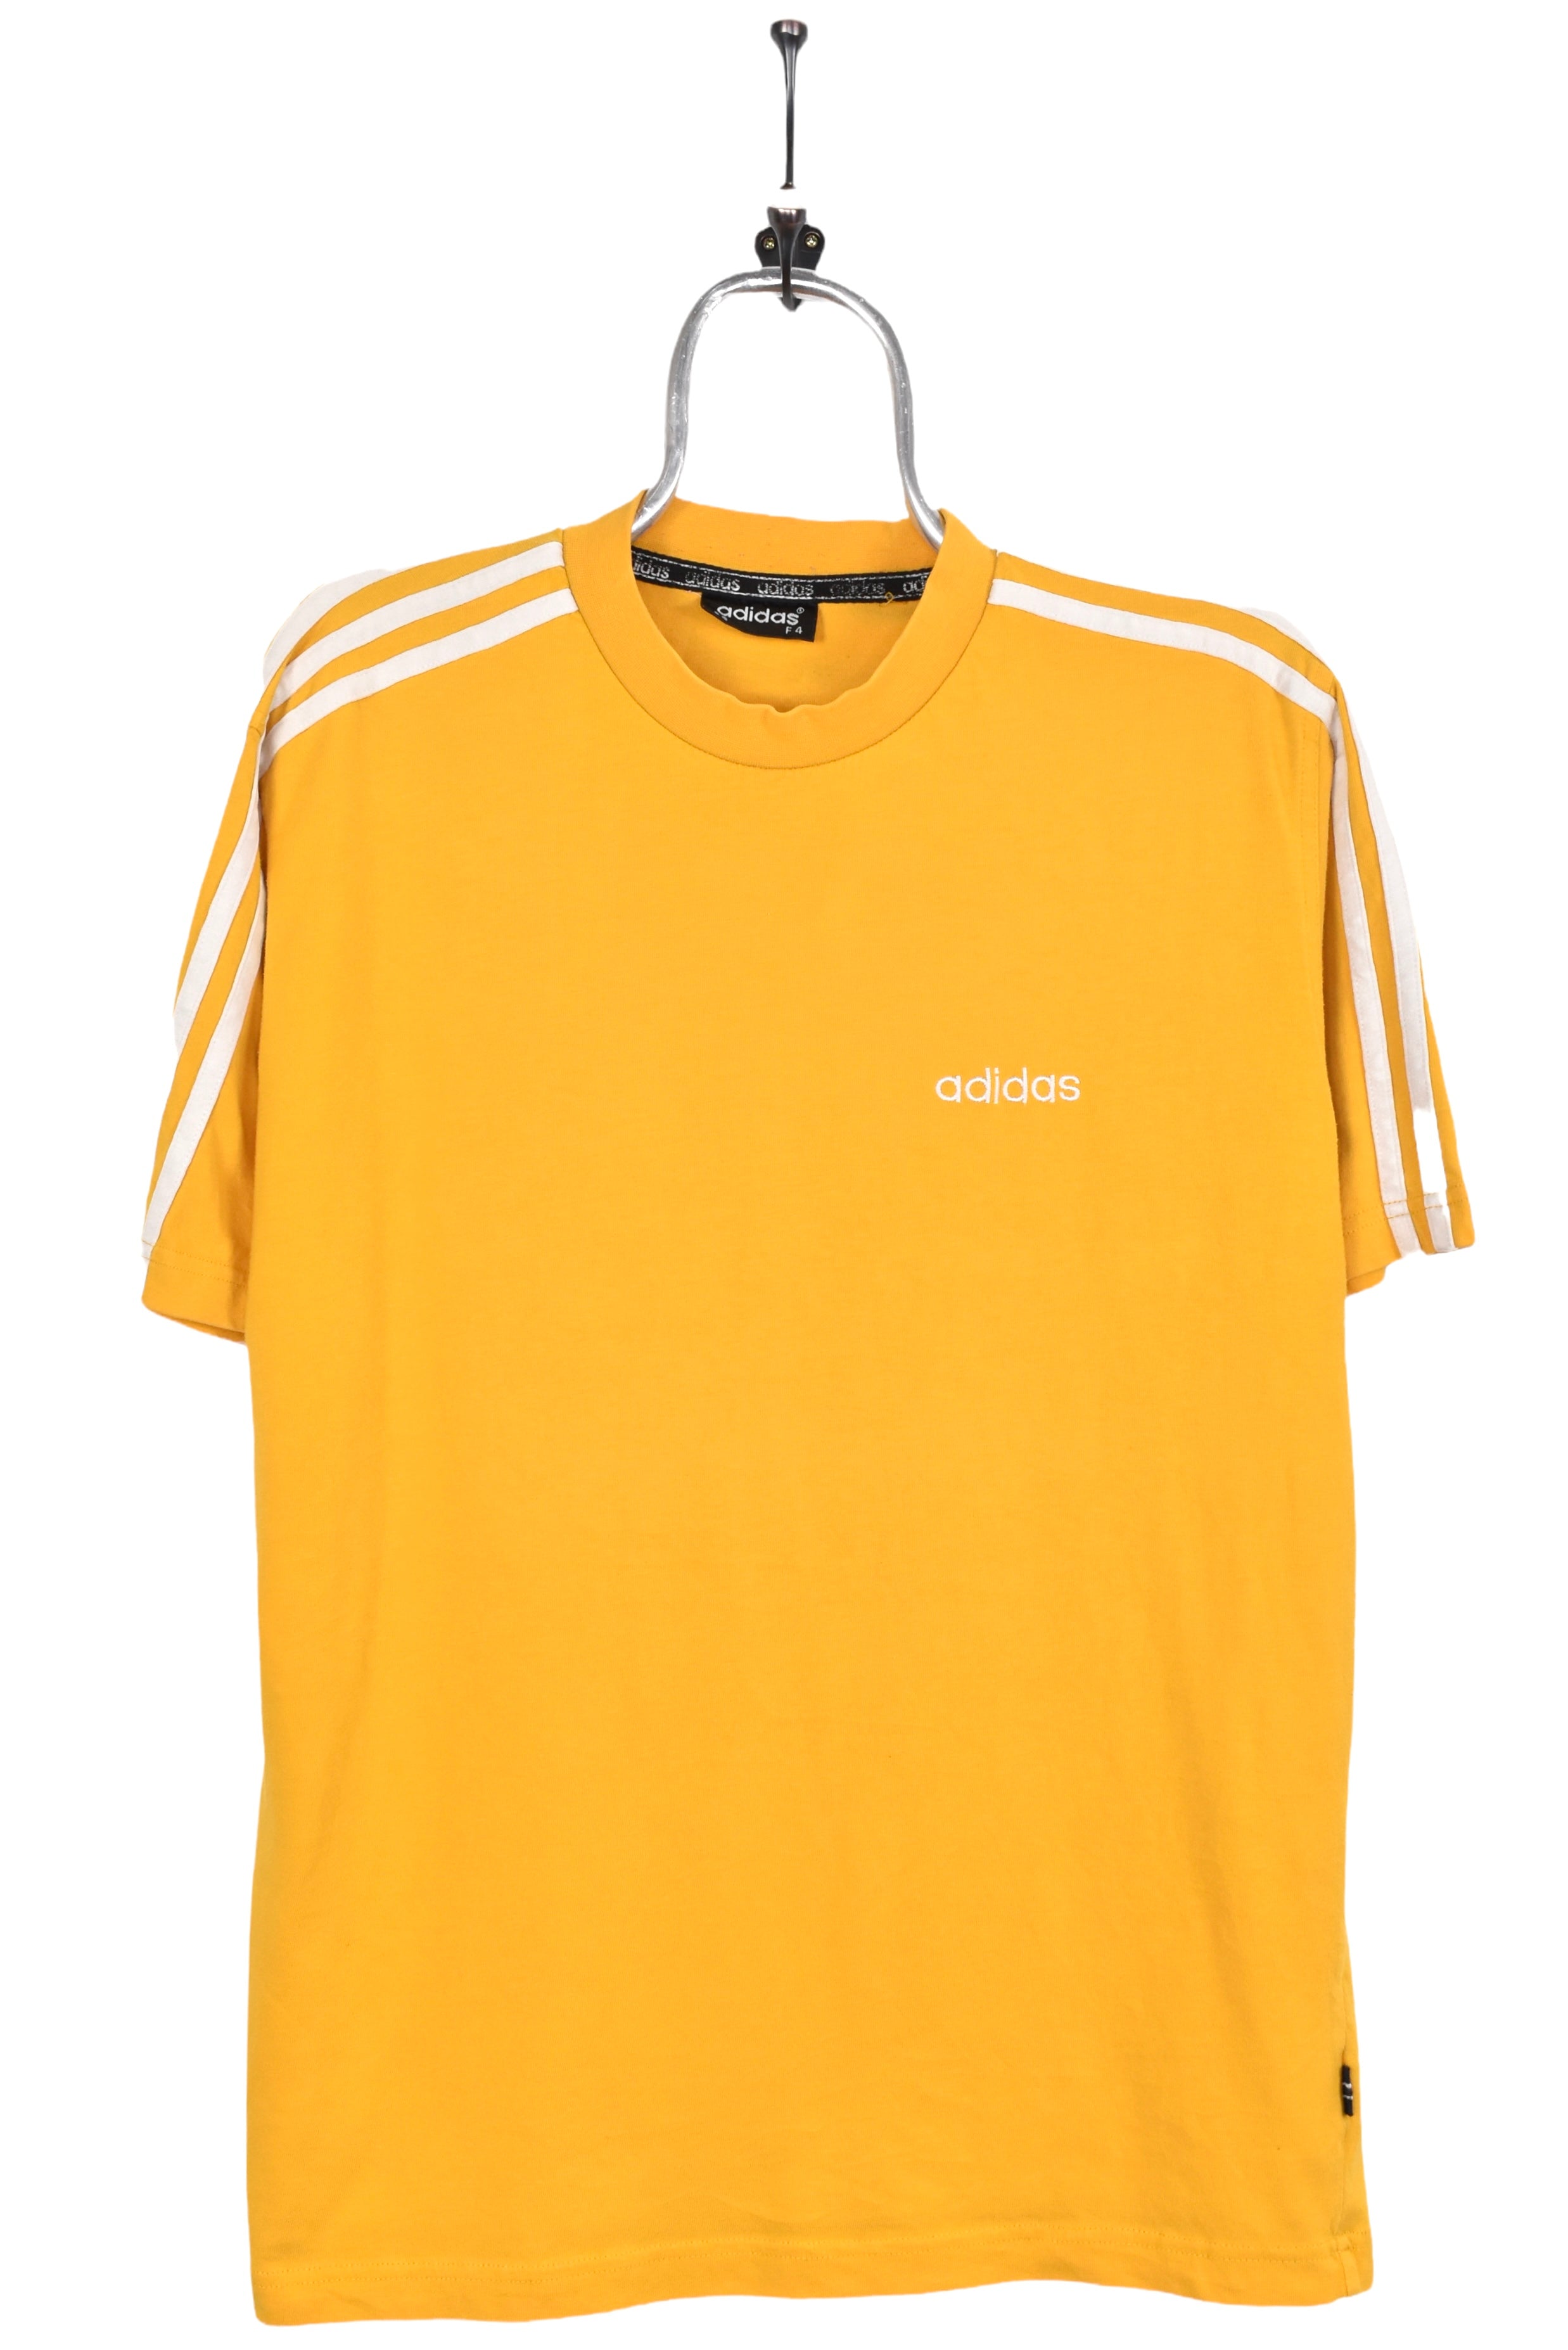 Vintage Adidas shirt, yellow embroidered tee - AU Large ADIDAS